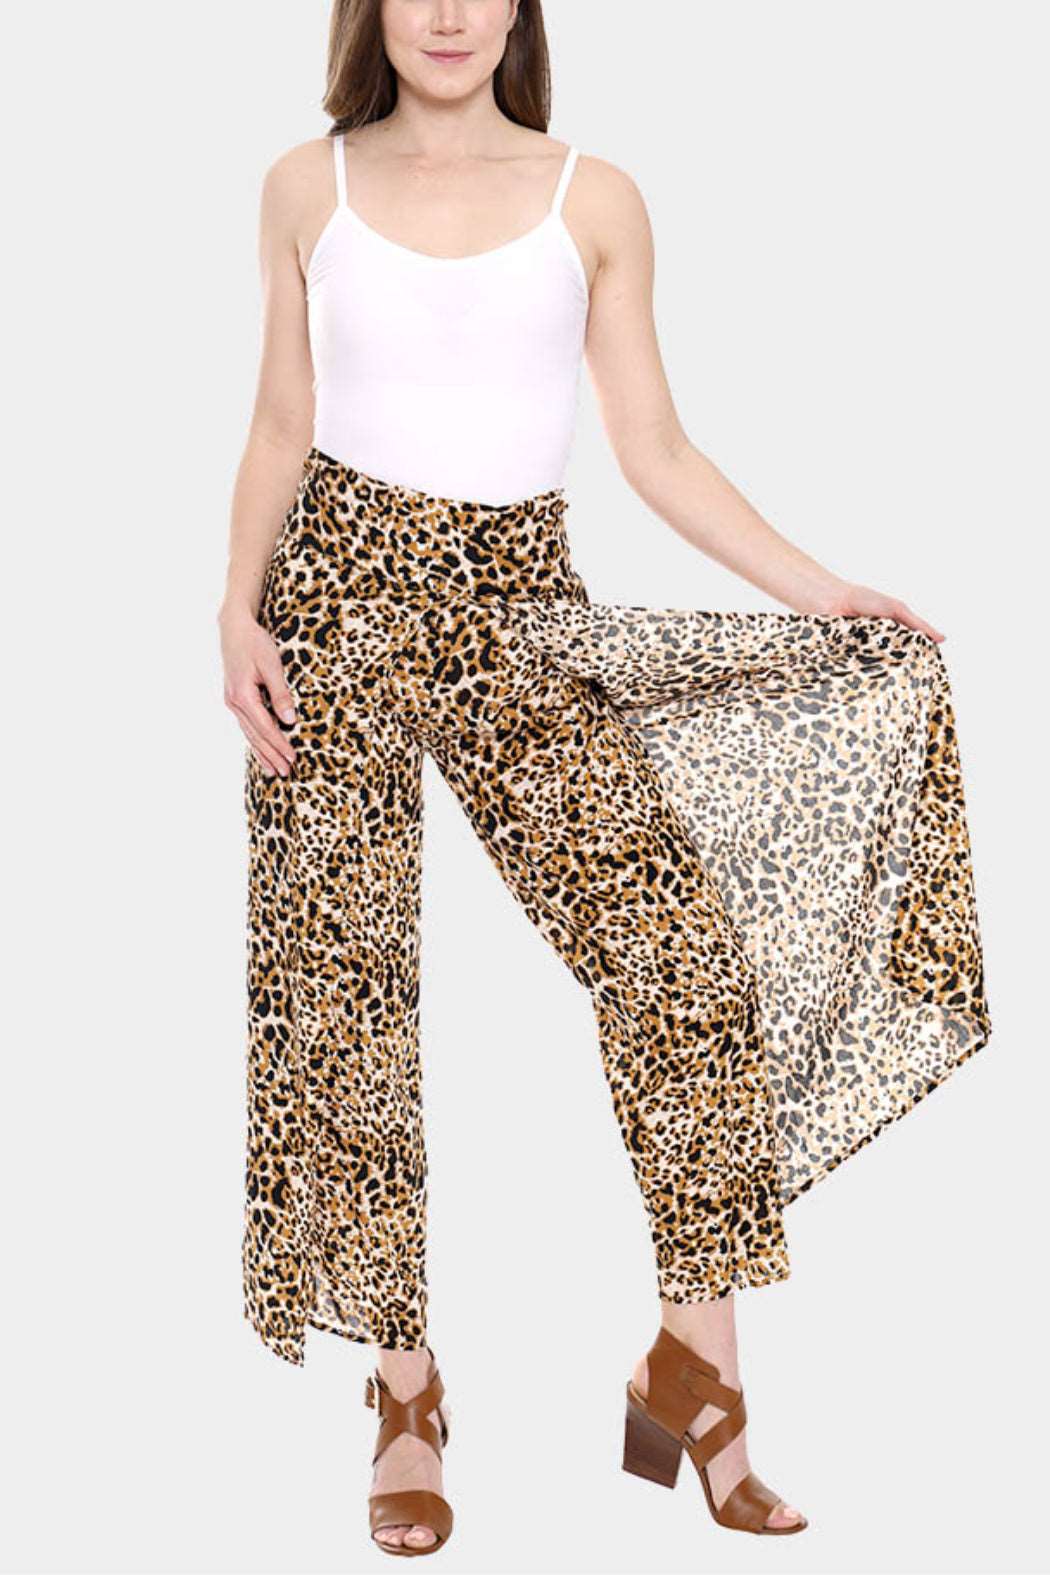 Leopard Ankle Pants - Embellish Your Life 